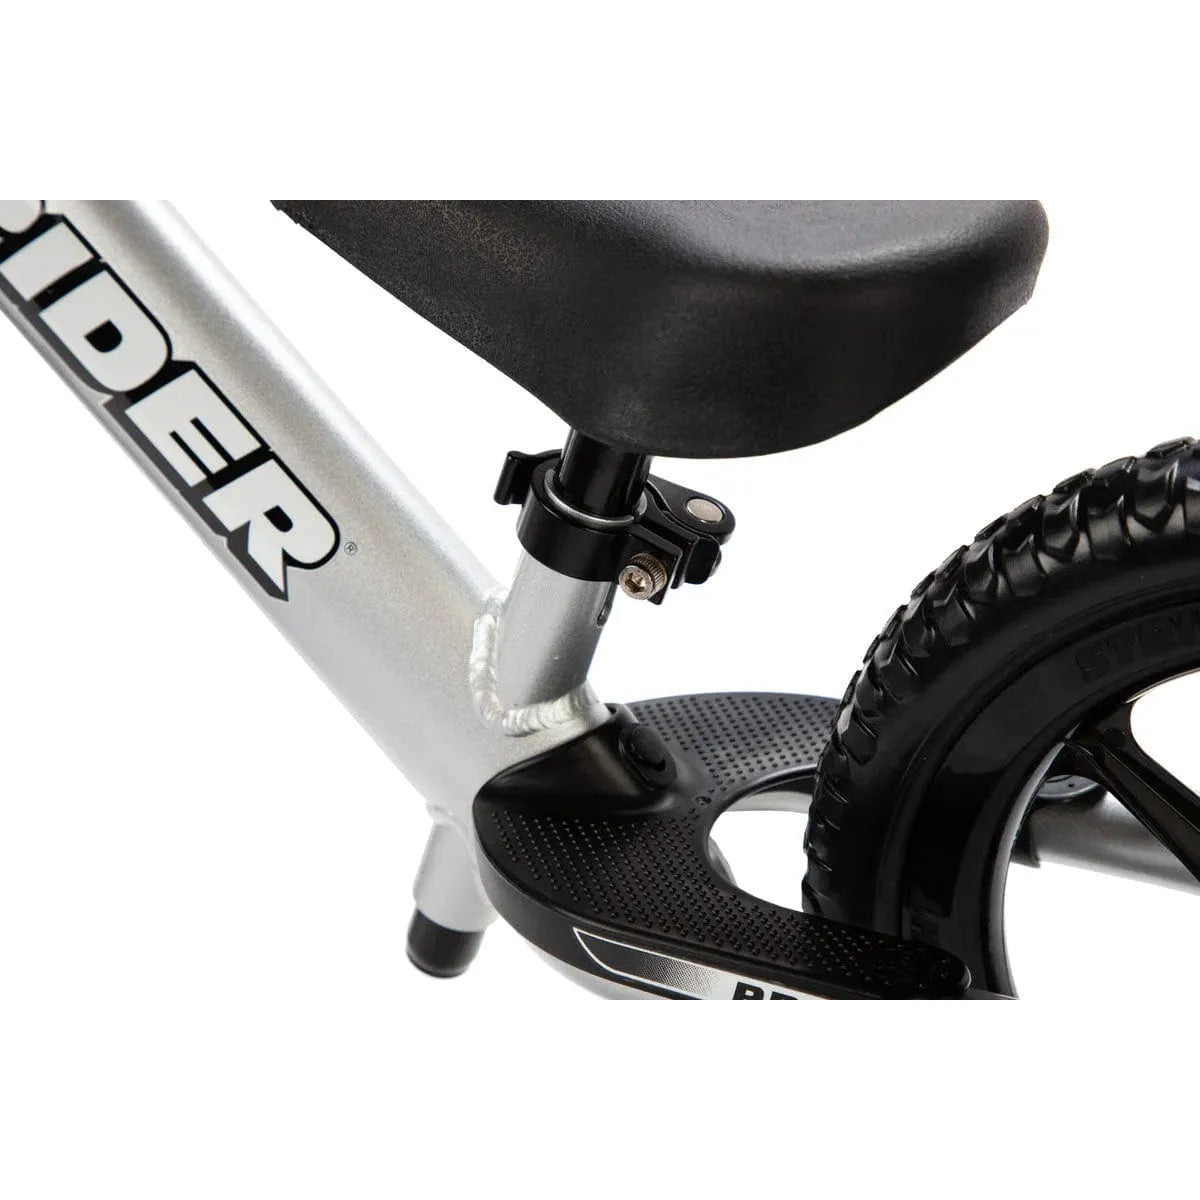 Strider Pro 12 inch Balance Bike - Silver footrest close up